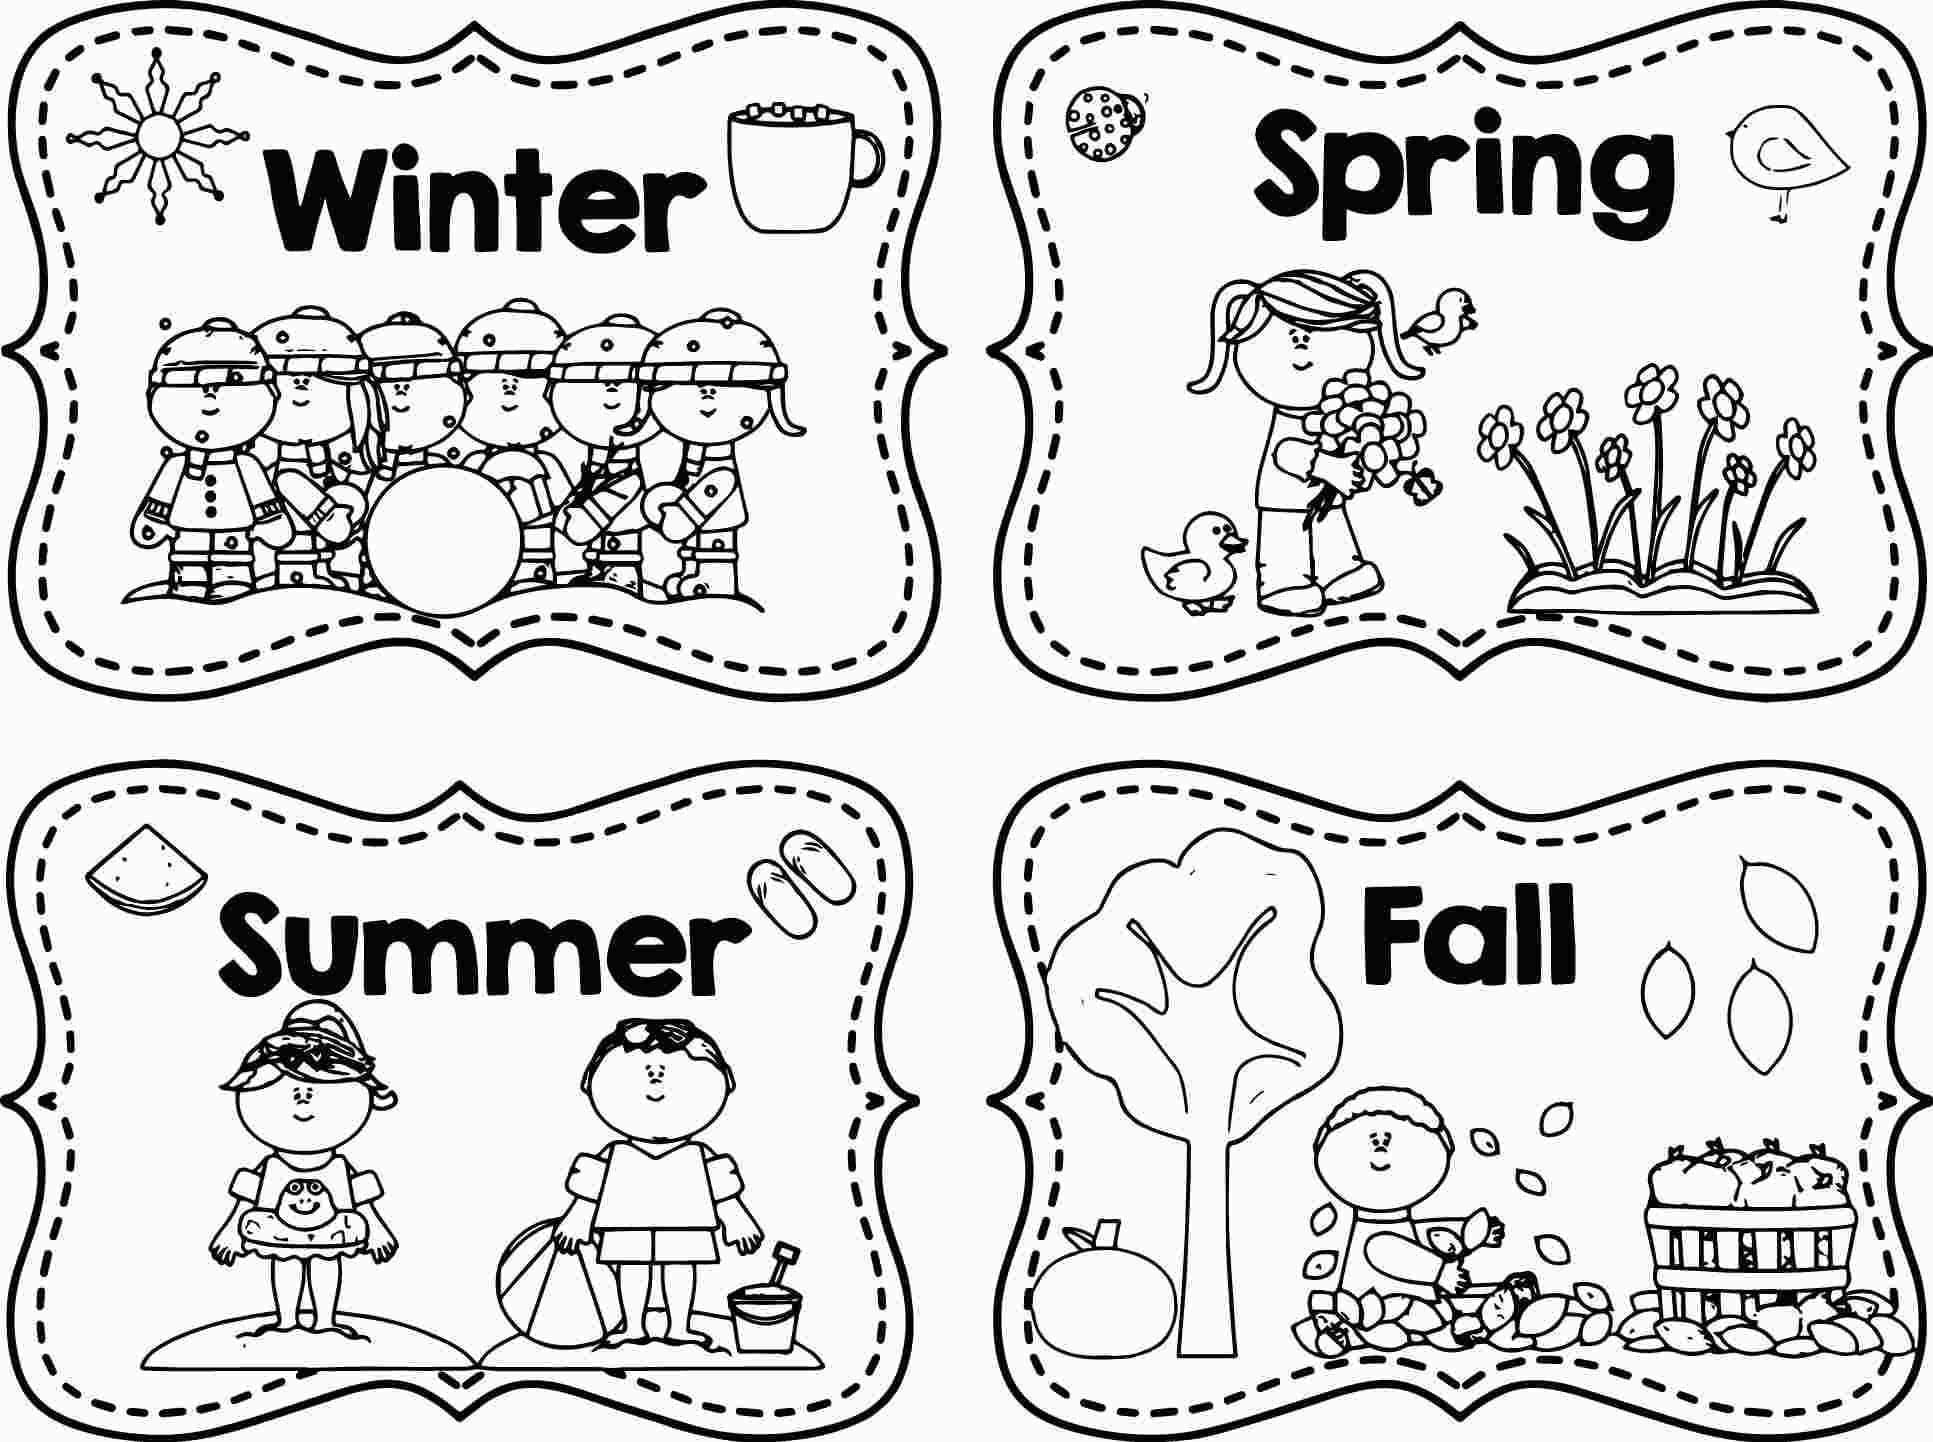 My new page. Seasons раскраска для детей. Раскраска на английском для детей. Раскраска для малышей на английском языке. Раскраска на англ для детей.